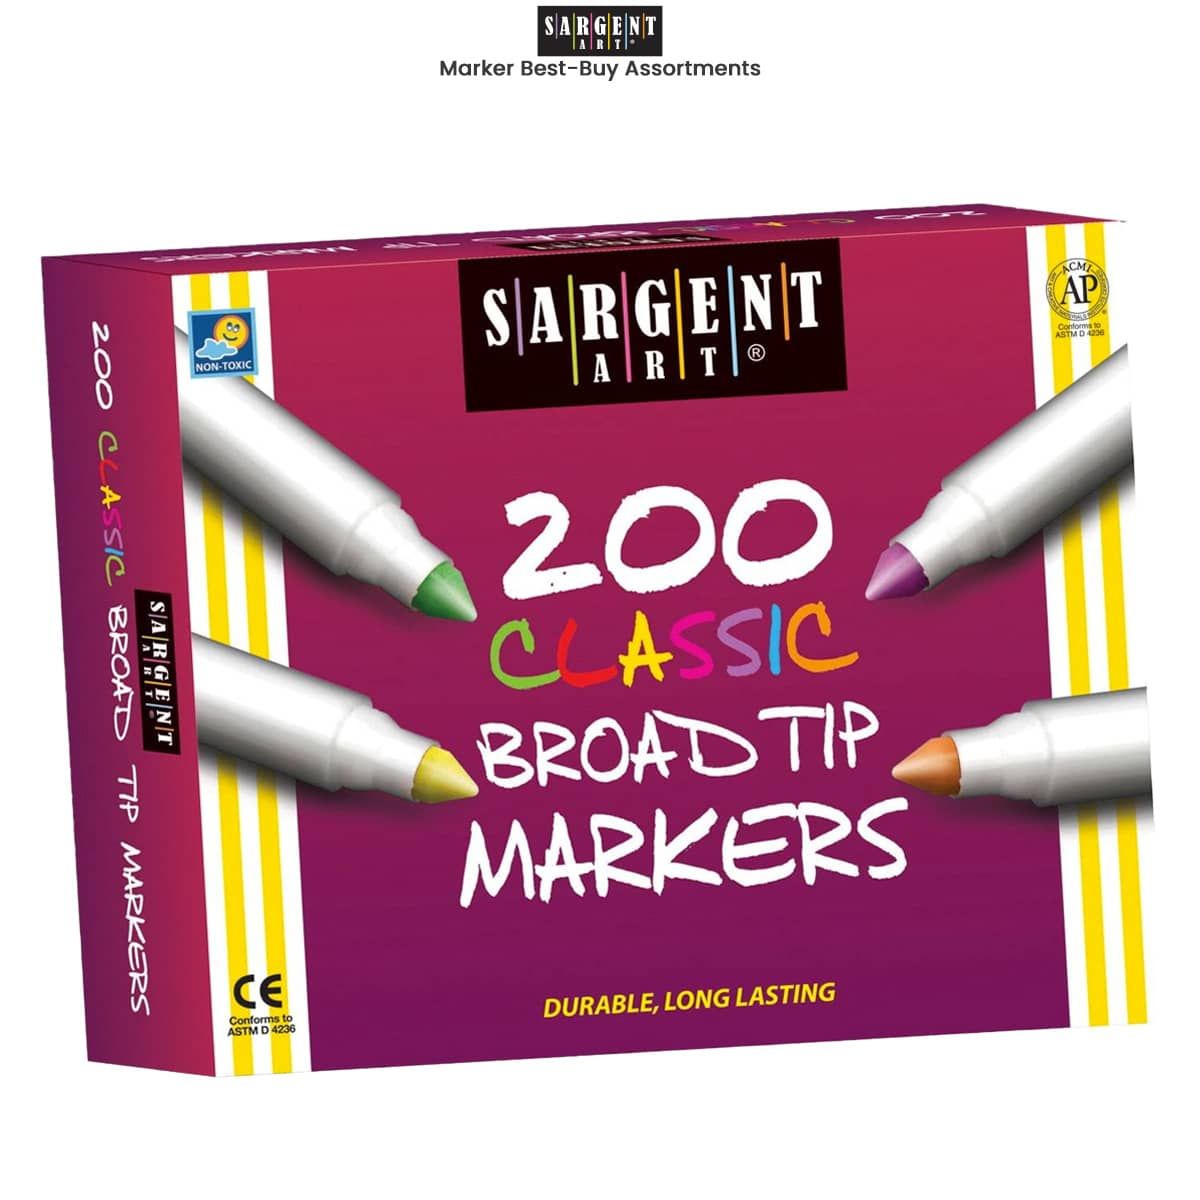 Sargent Art Marker Best-Buy Assortments